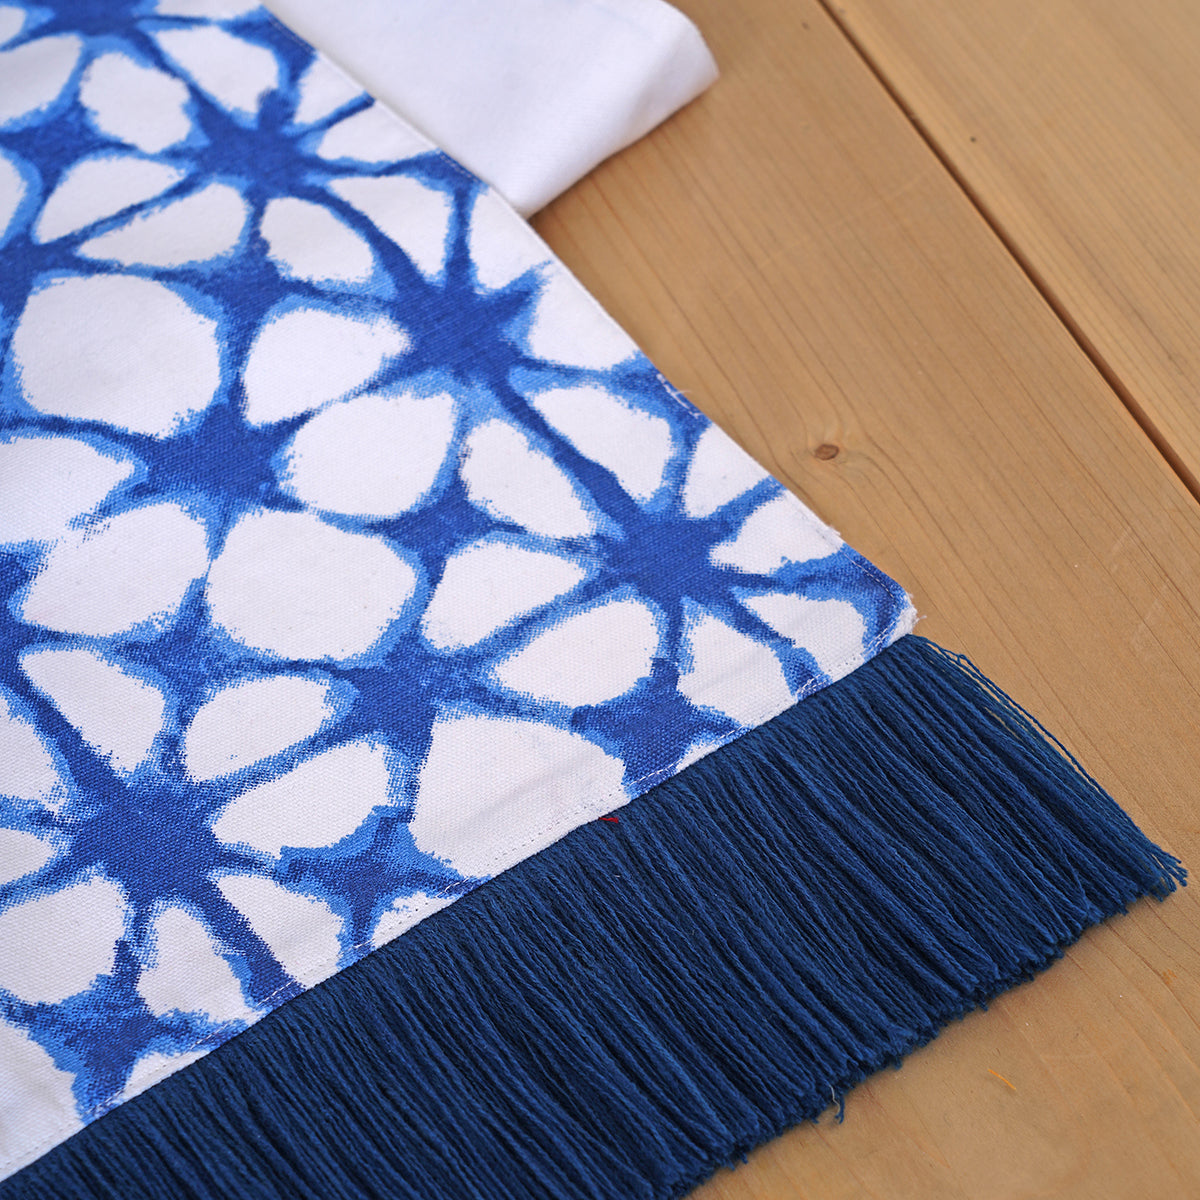 Blue table runner, tie dye prism print, blue fringe border, sizes available